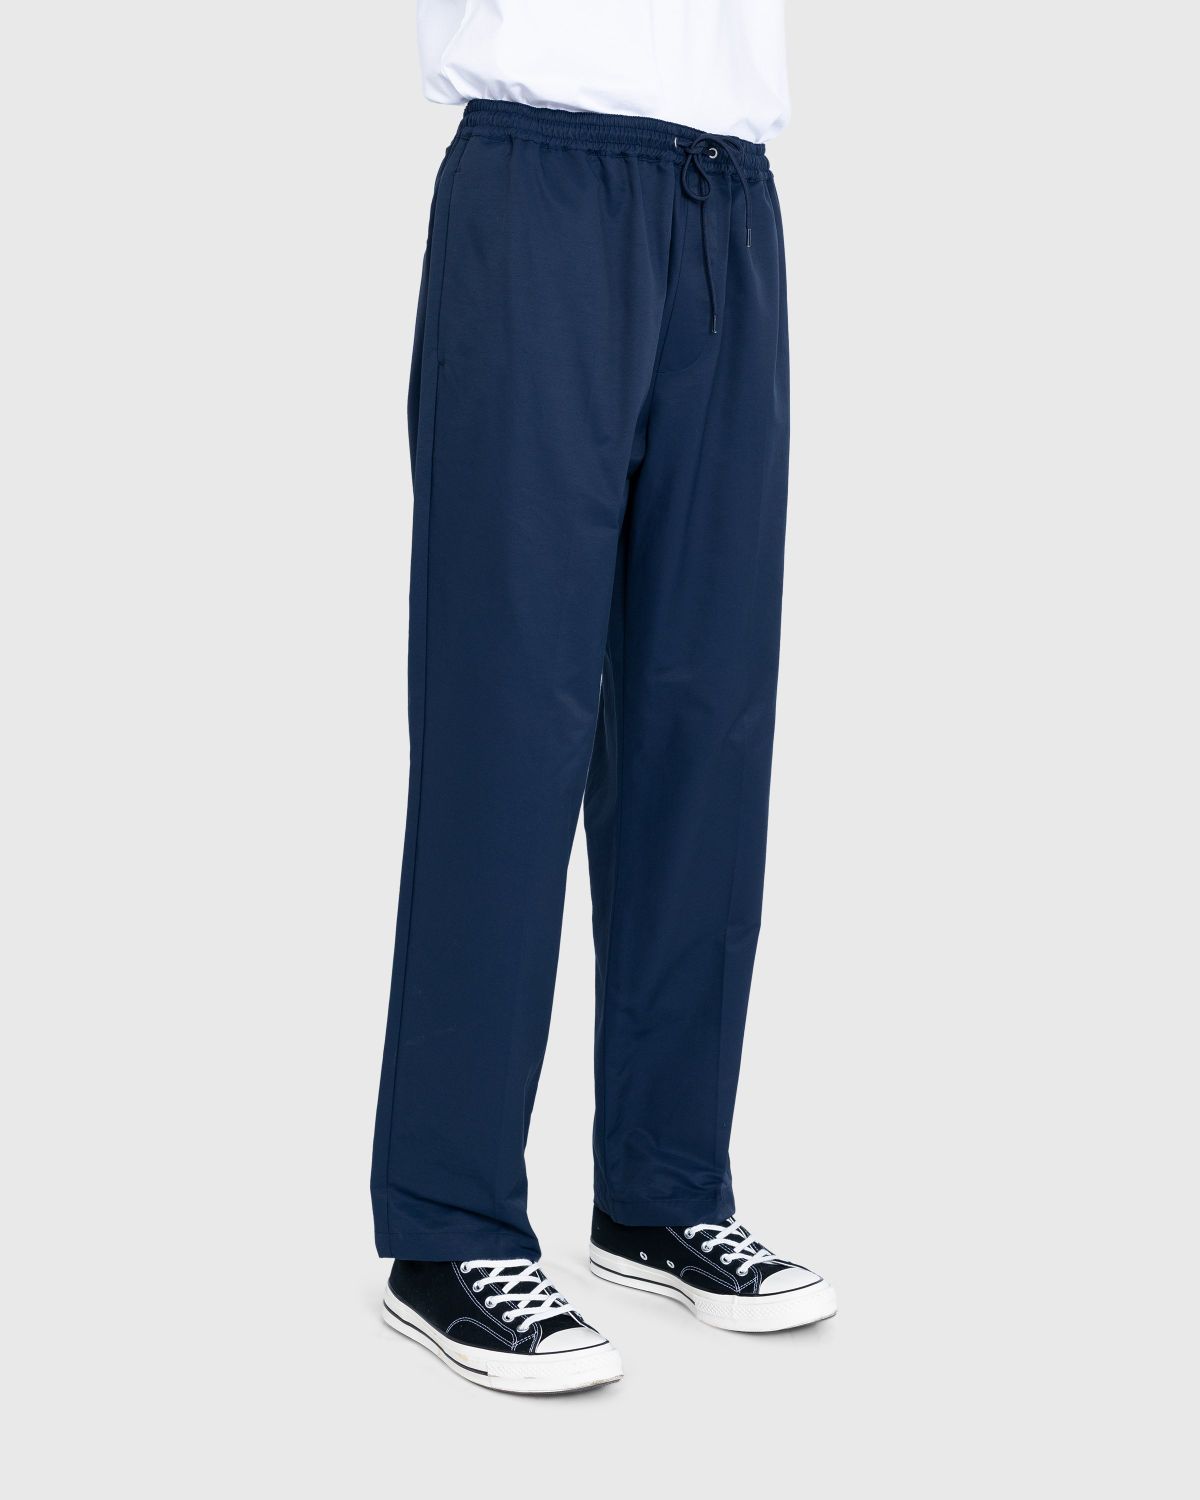 Highsnobiety – Cotton Nylon Elastic Pants Navy - Pants - Blue - Image 3